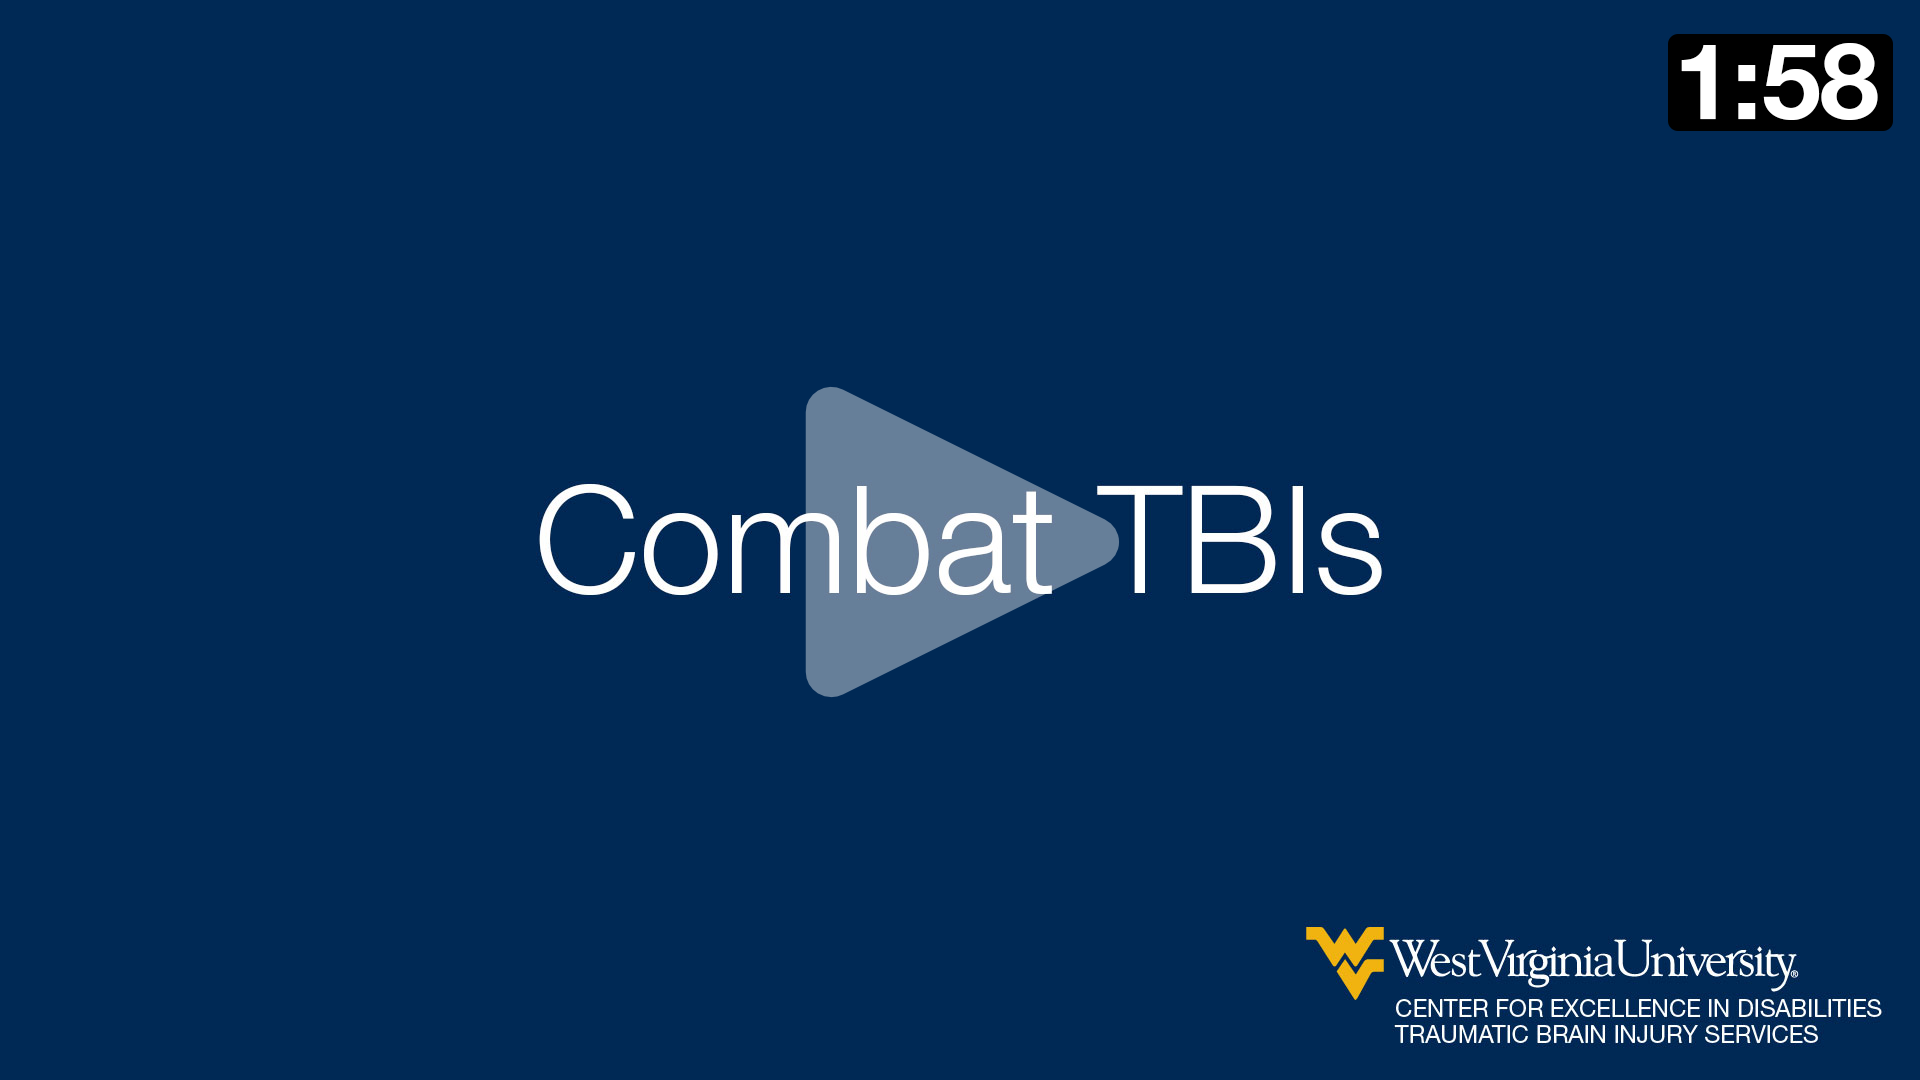 Stephen Heck talks about combat TBIs